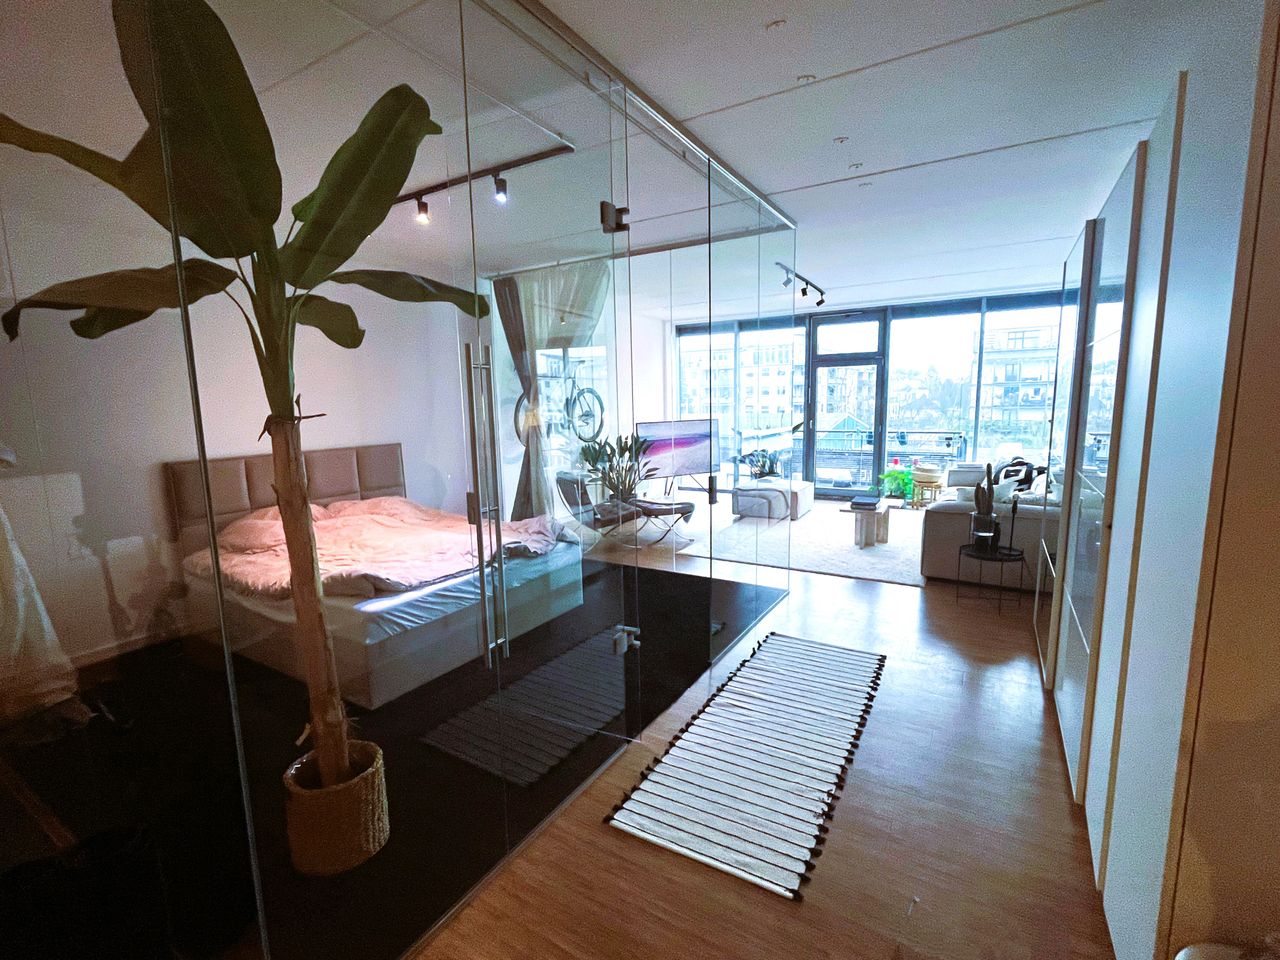 Breathtaking spacious loft with designer furnishings